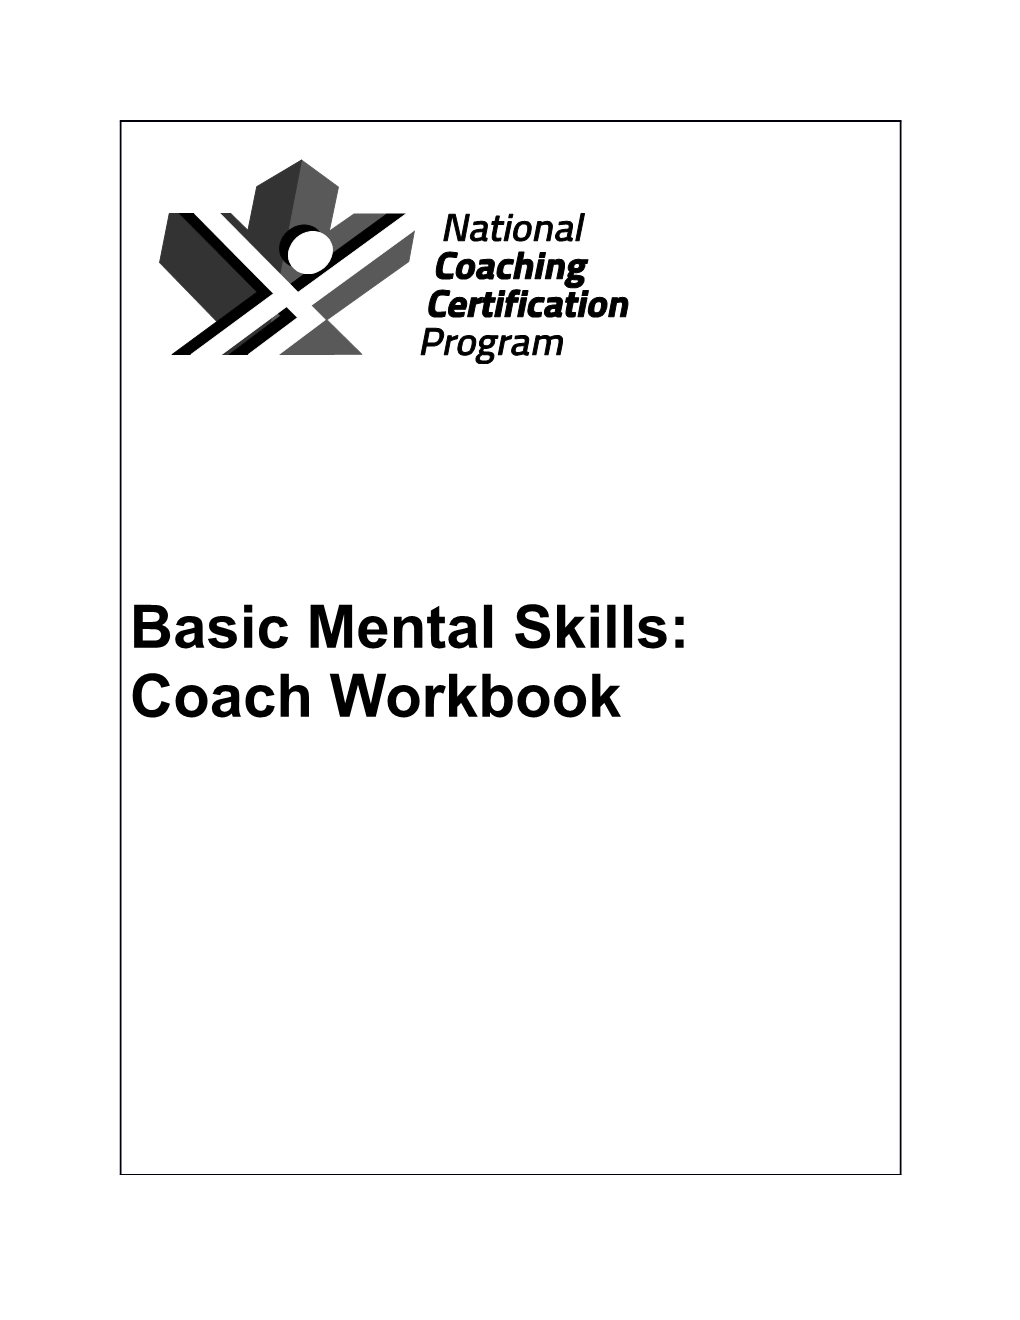 Basic Mental Skills: Coach Workbook